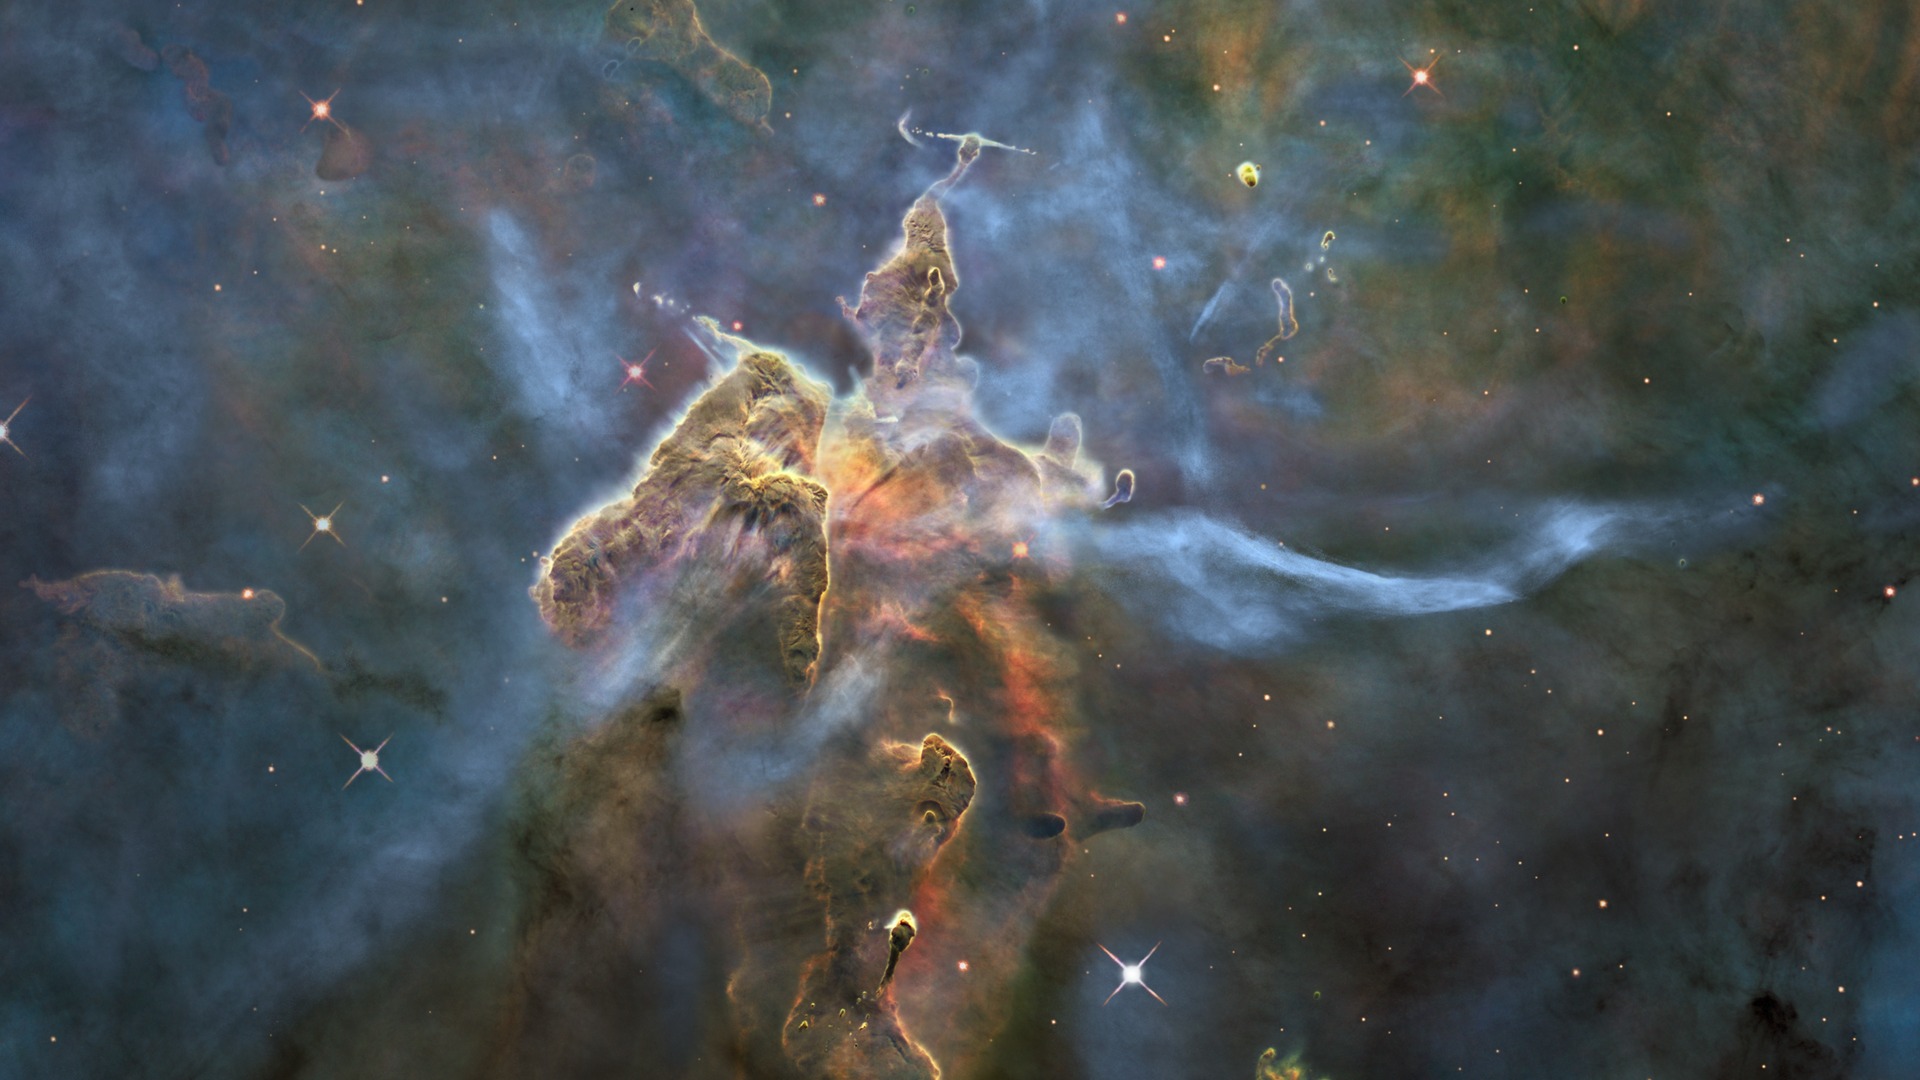 Flight into the "Mystic Mountain" pillars of gas in the Carina Nebula